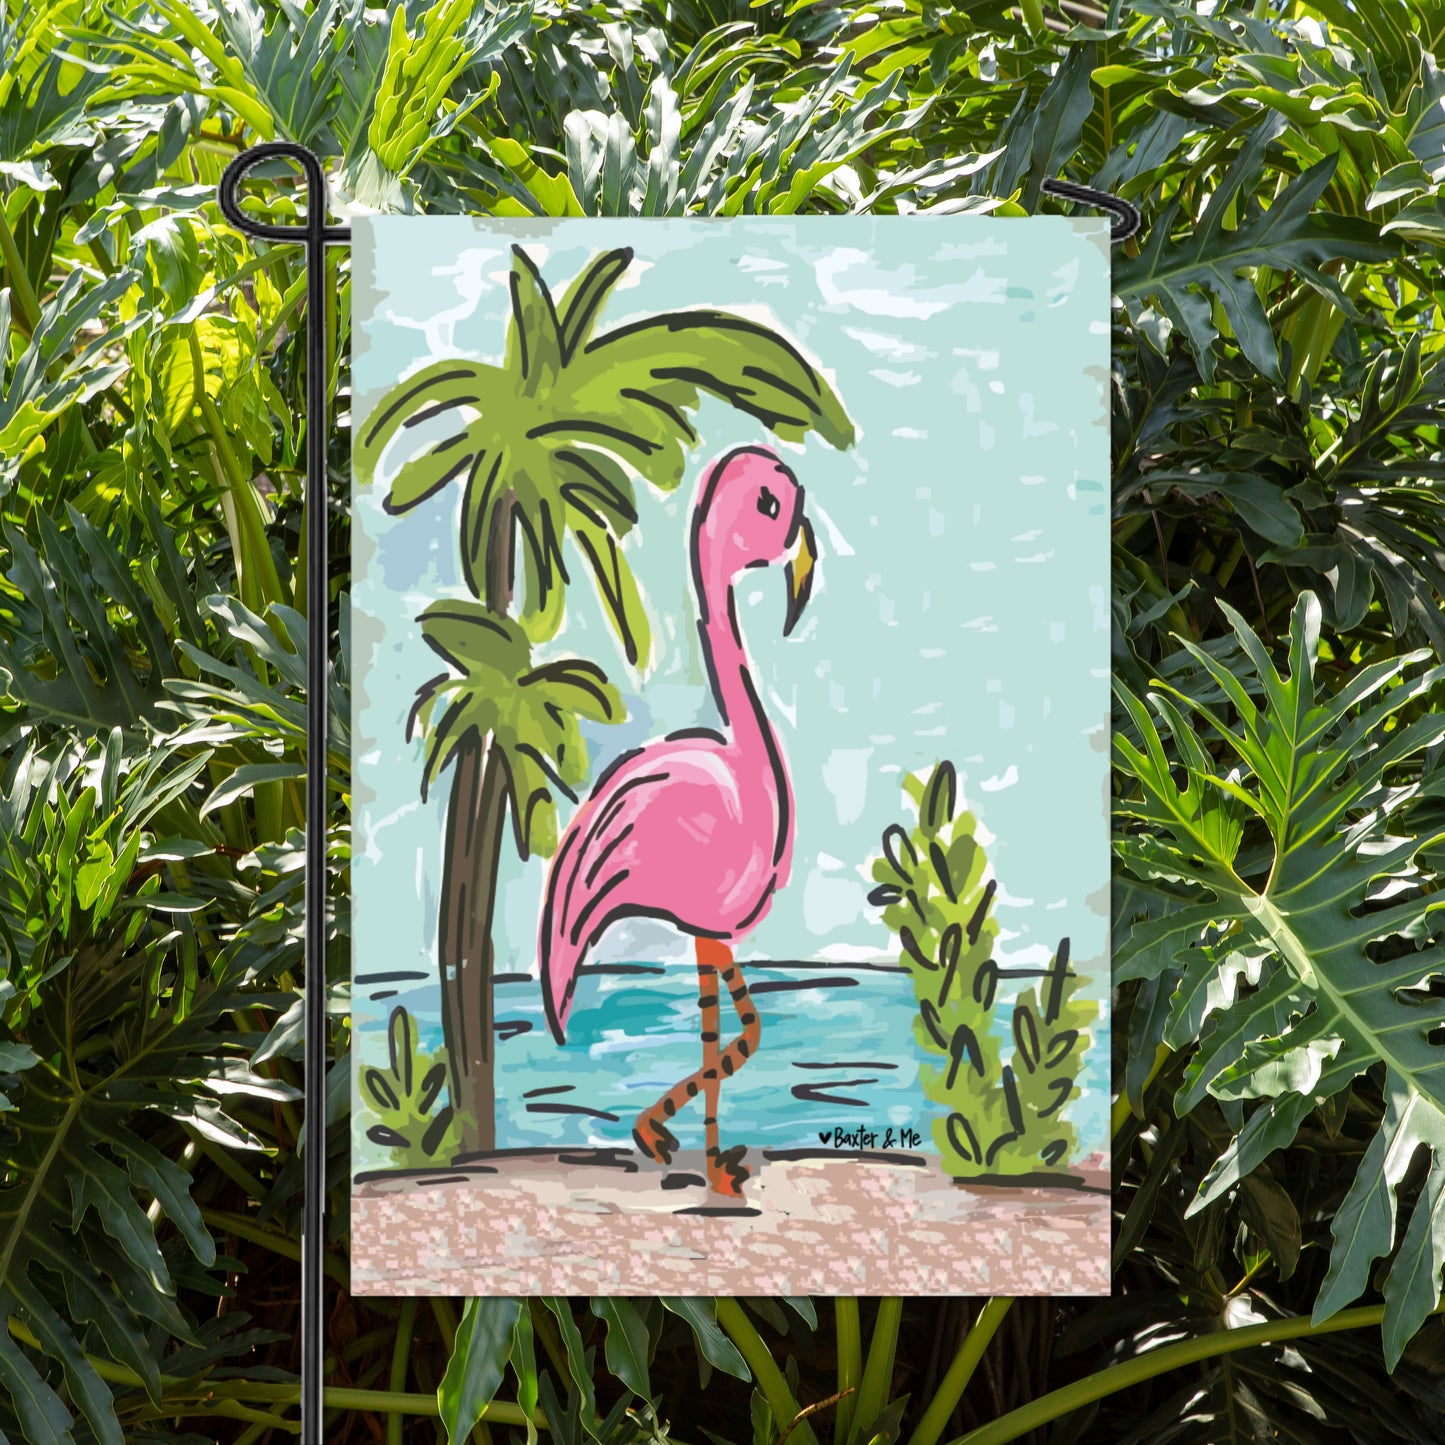 Palm Tree Flamingo Garden Flag